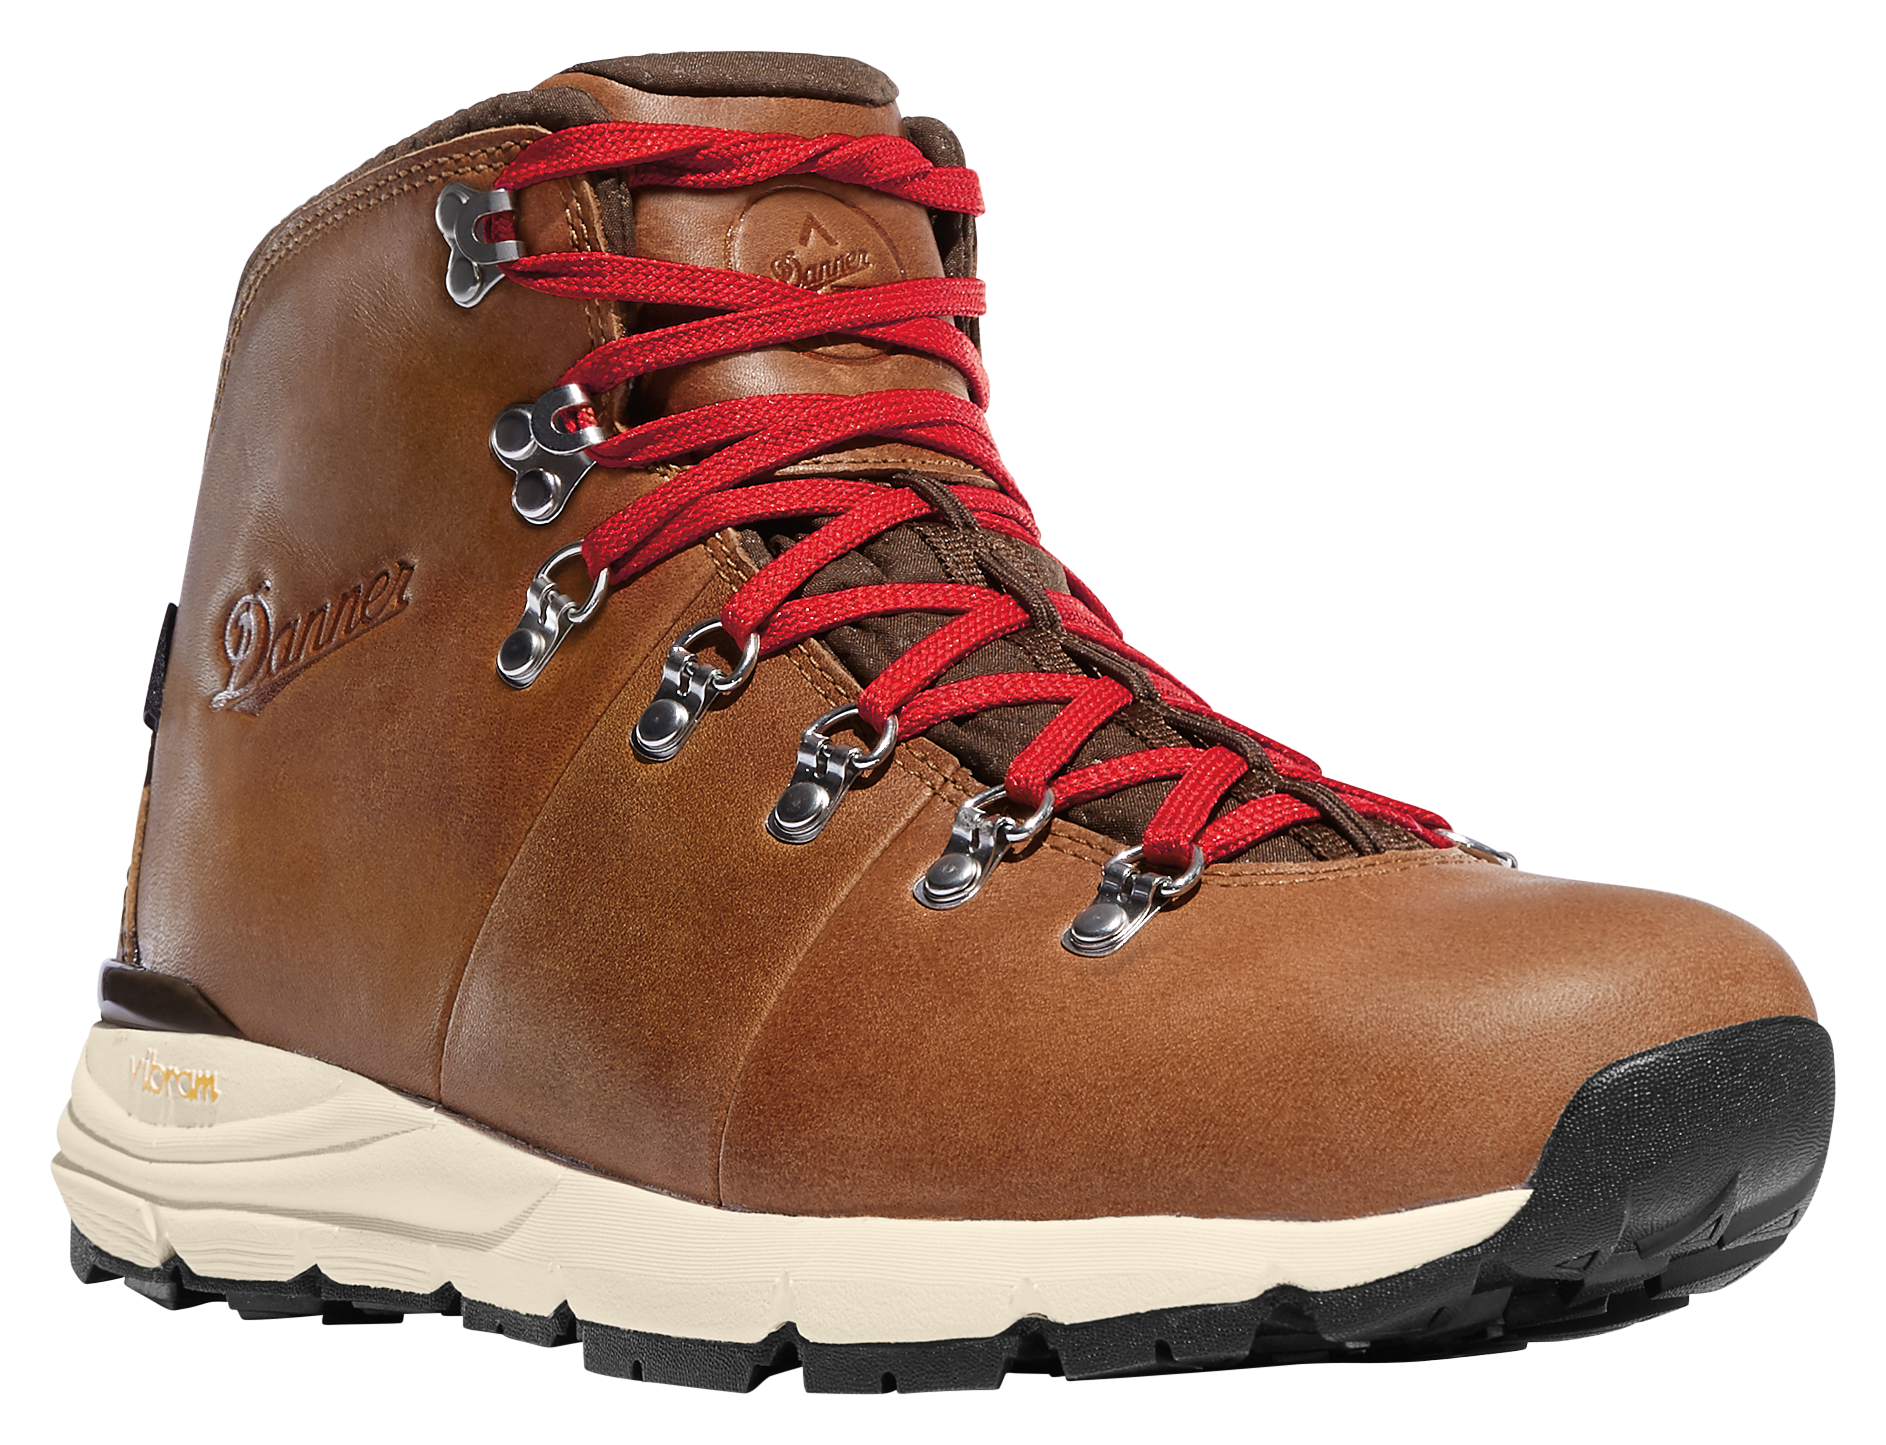 Danner Mountain 600 Waterproof Hiking Boots for Men - Saddle Tan - 10.5M